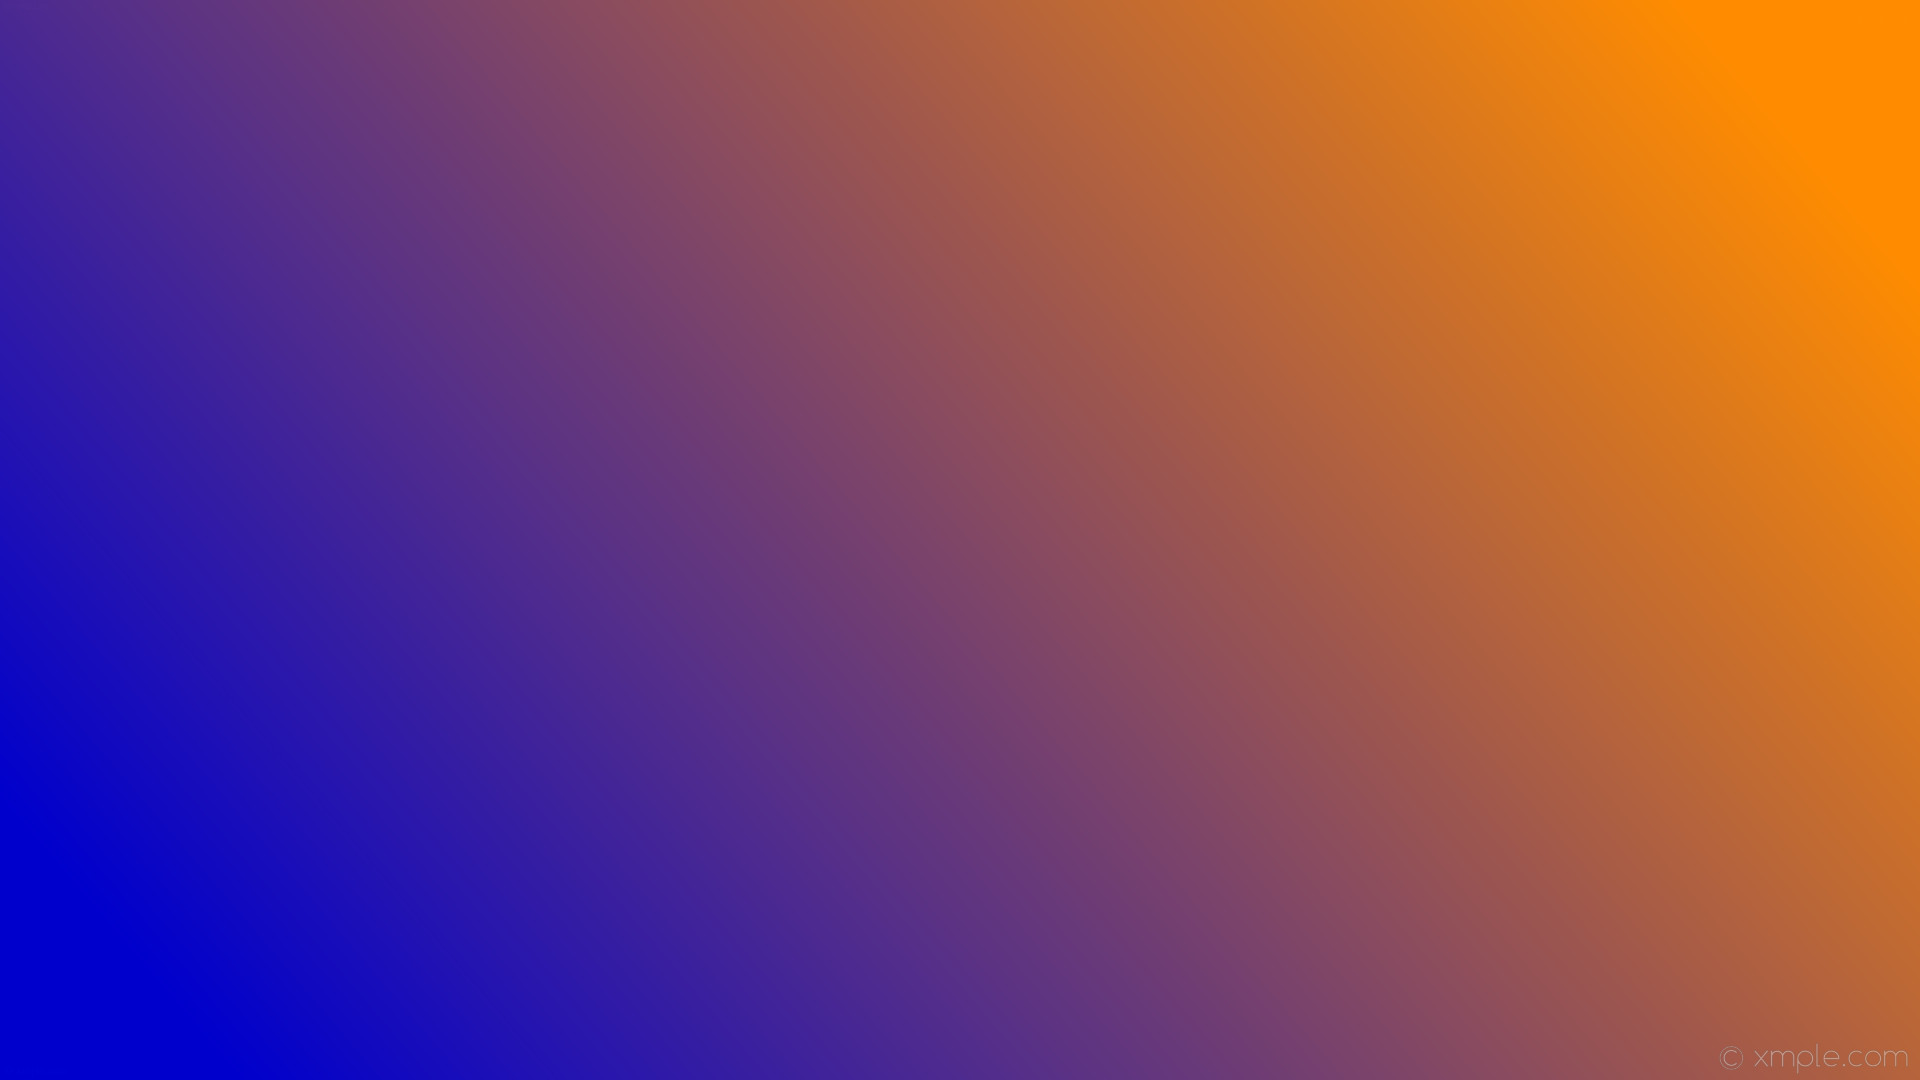 1920x1080 wallpaper linear orange gradient blue dark orange medium blue #ff8c00  #0000cd 15Â°